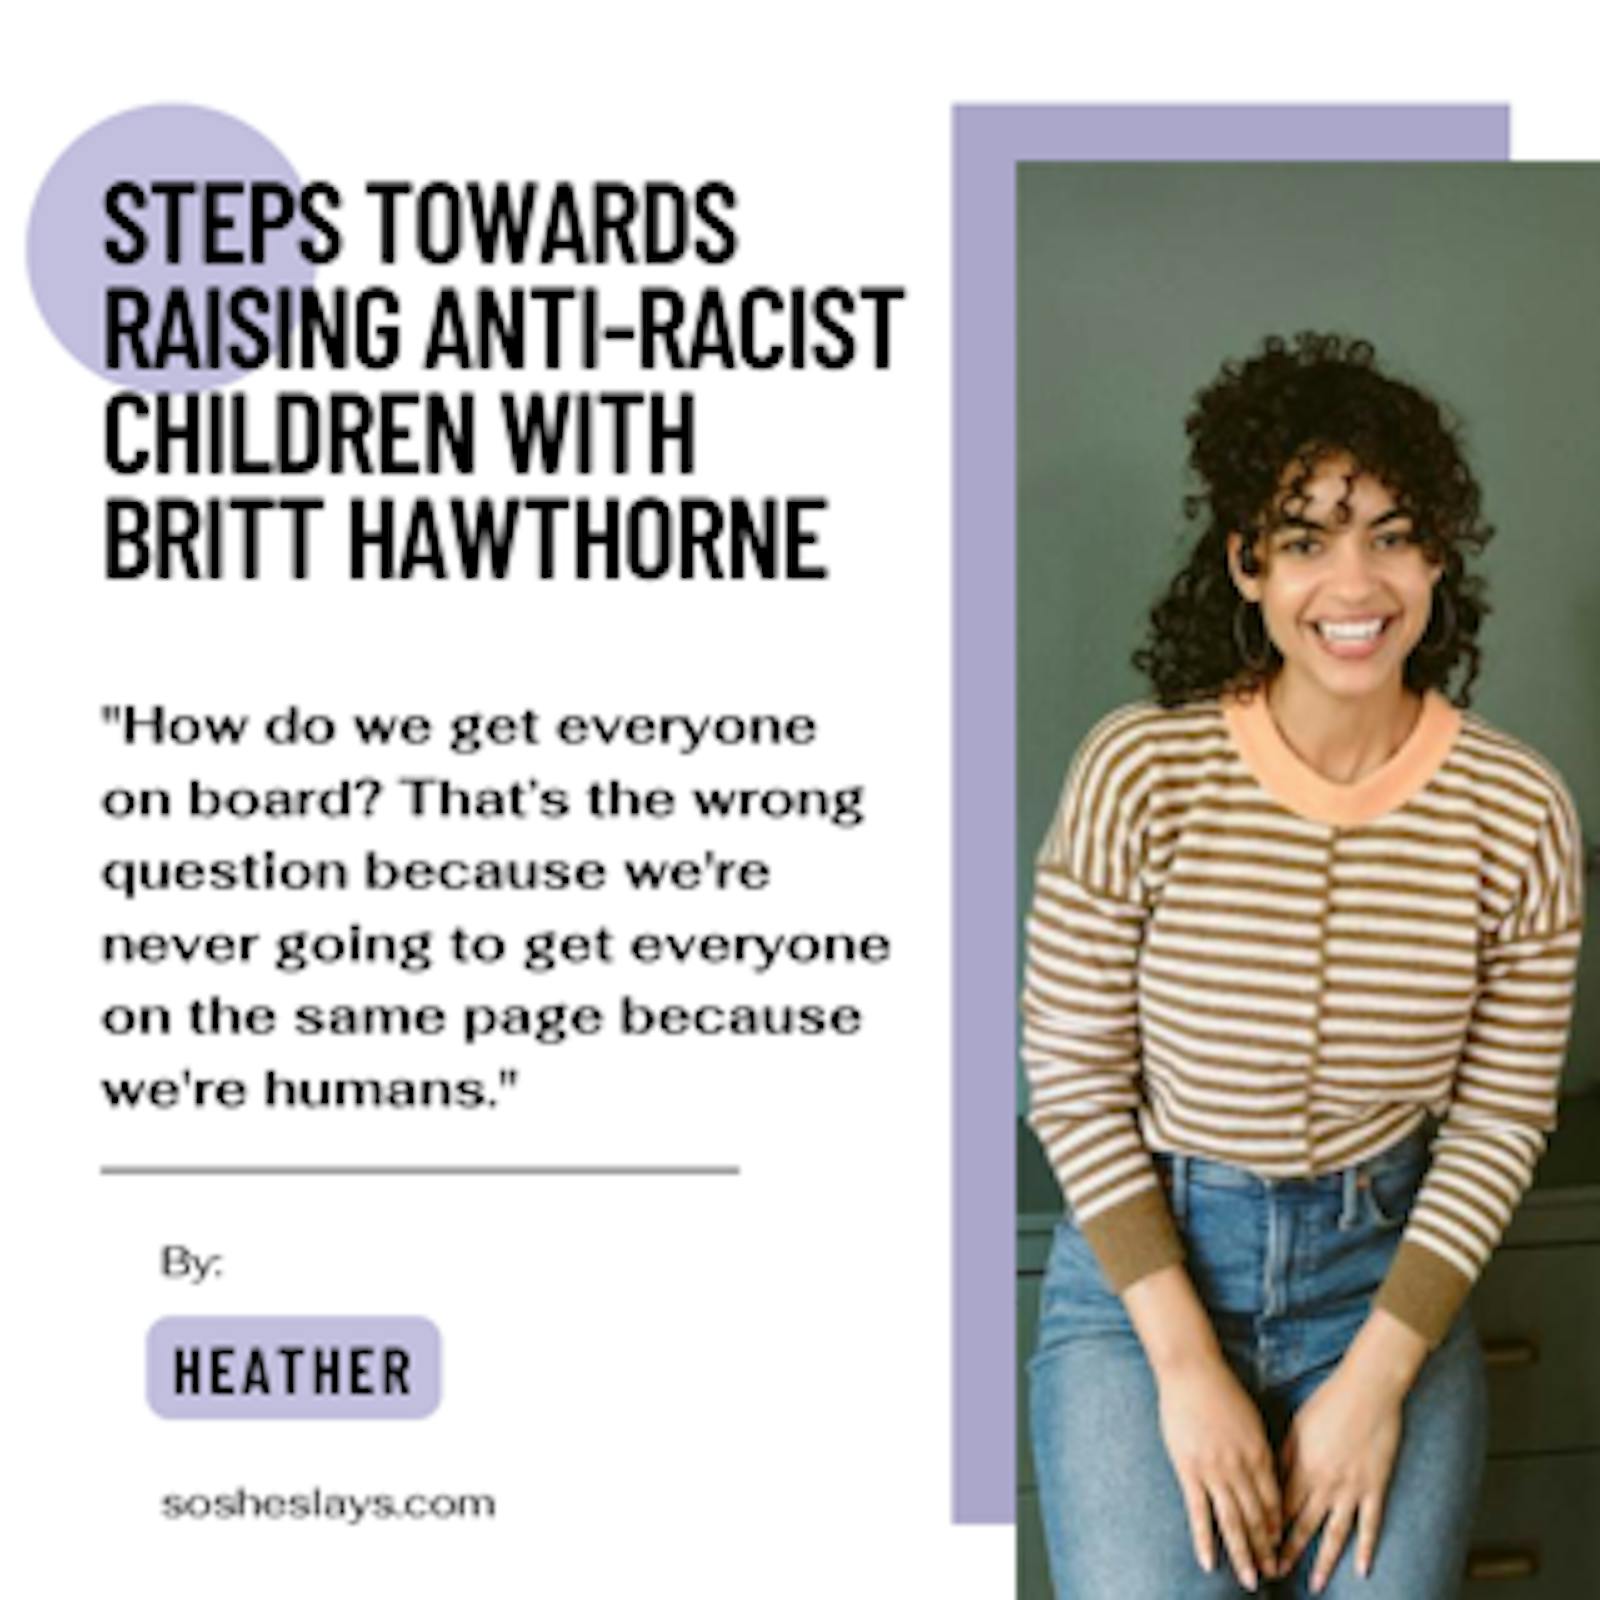 Steps Towards Raising Anti-Racist Children with Britt Hawthorne